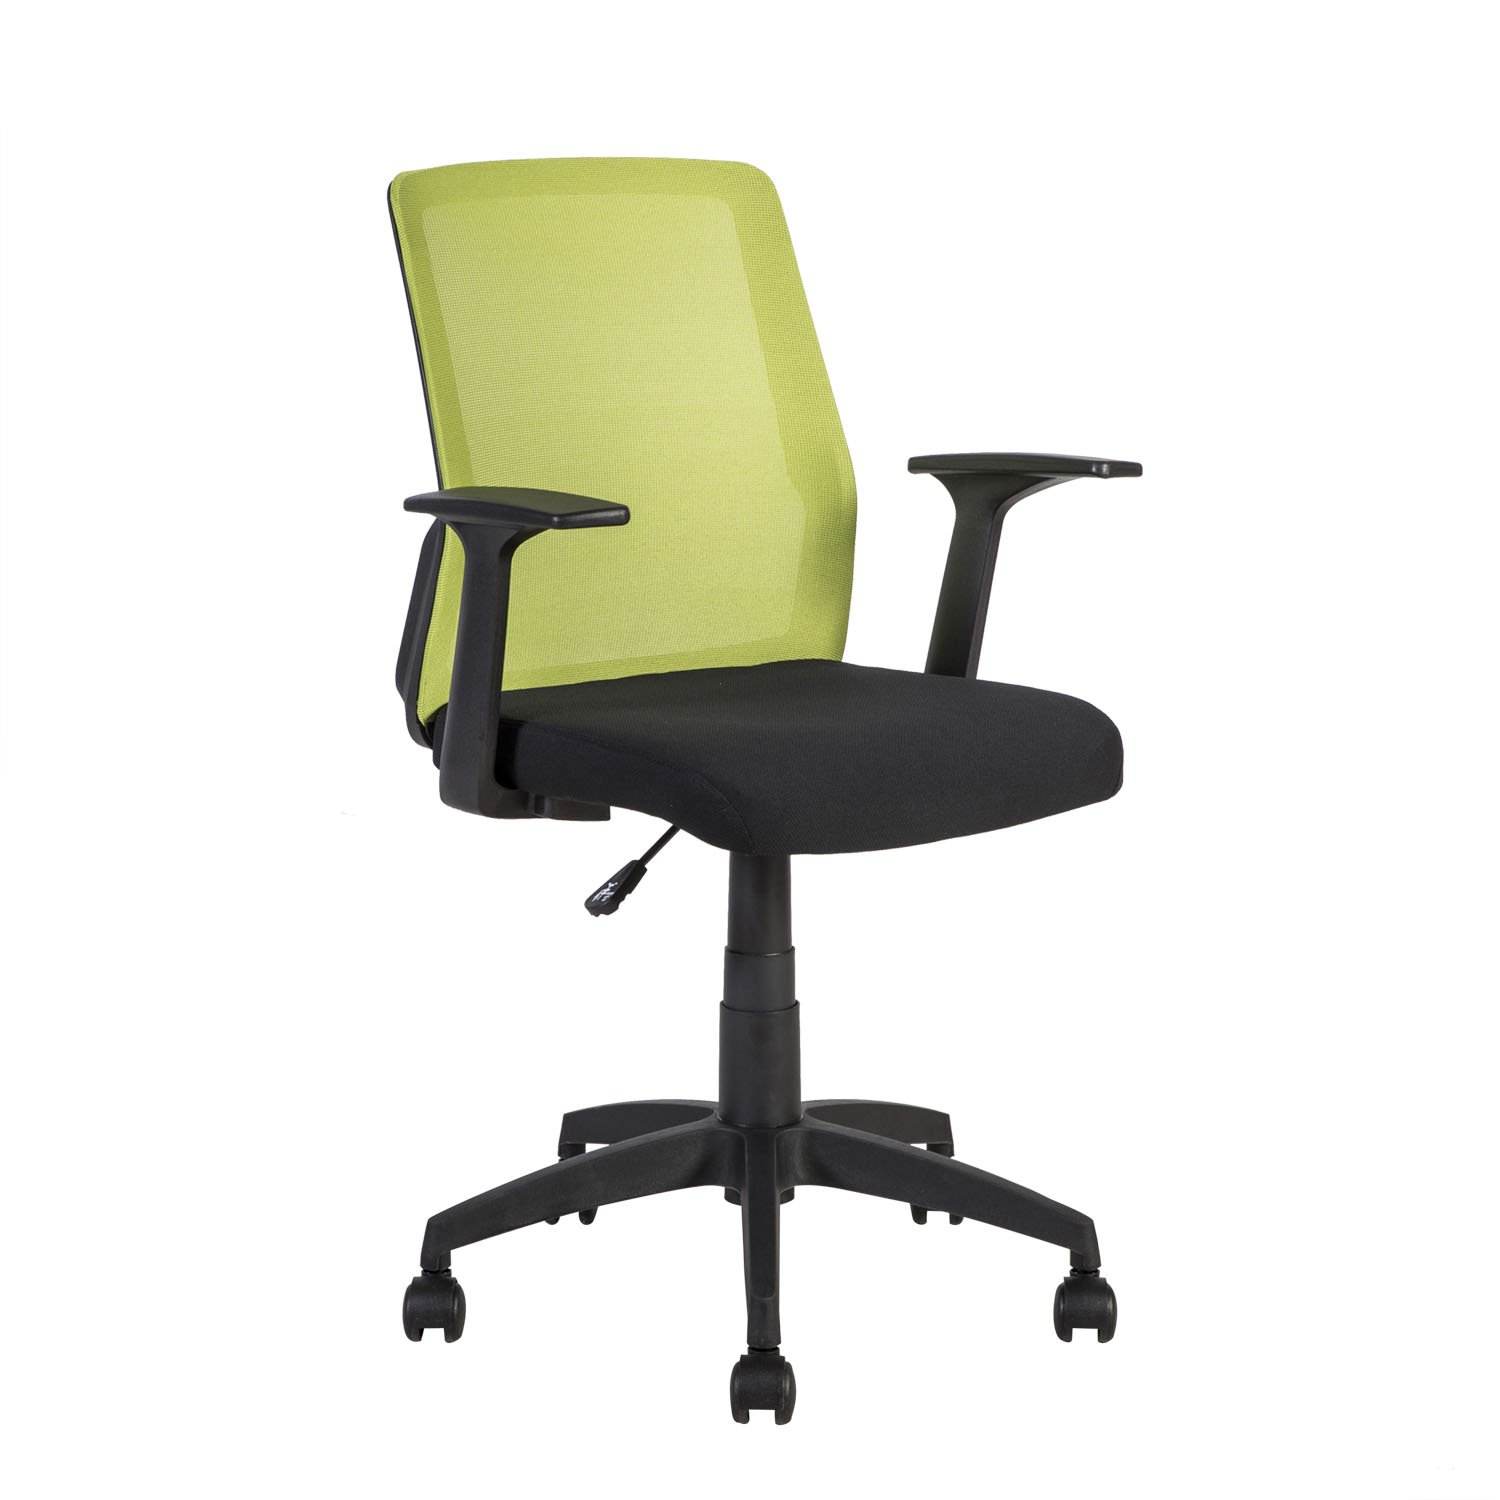 Biuro kėdė ALPHA, 60x55x87,5-95 cm, juoda/žalia